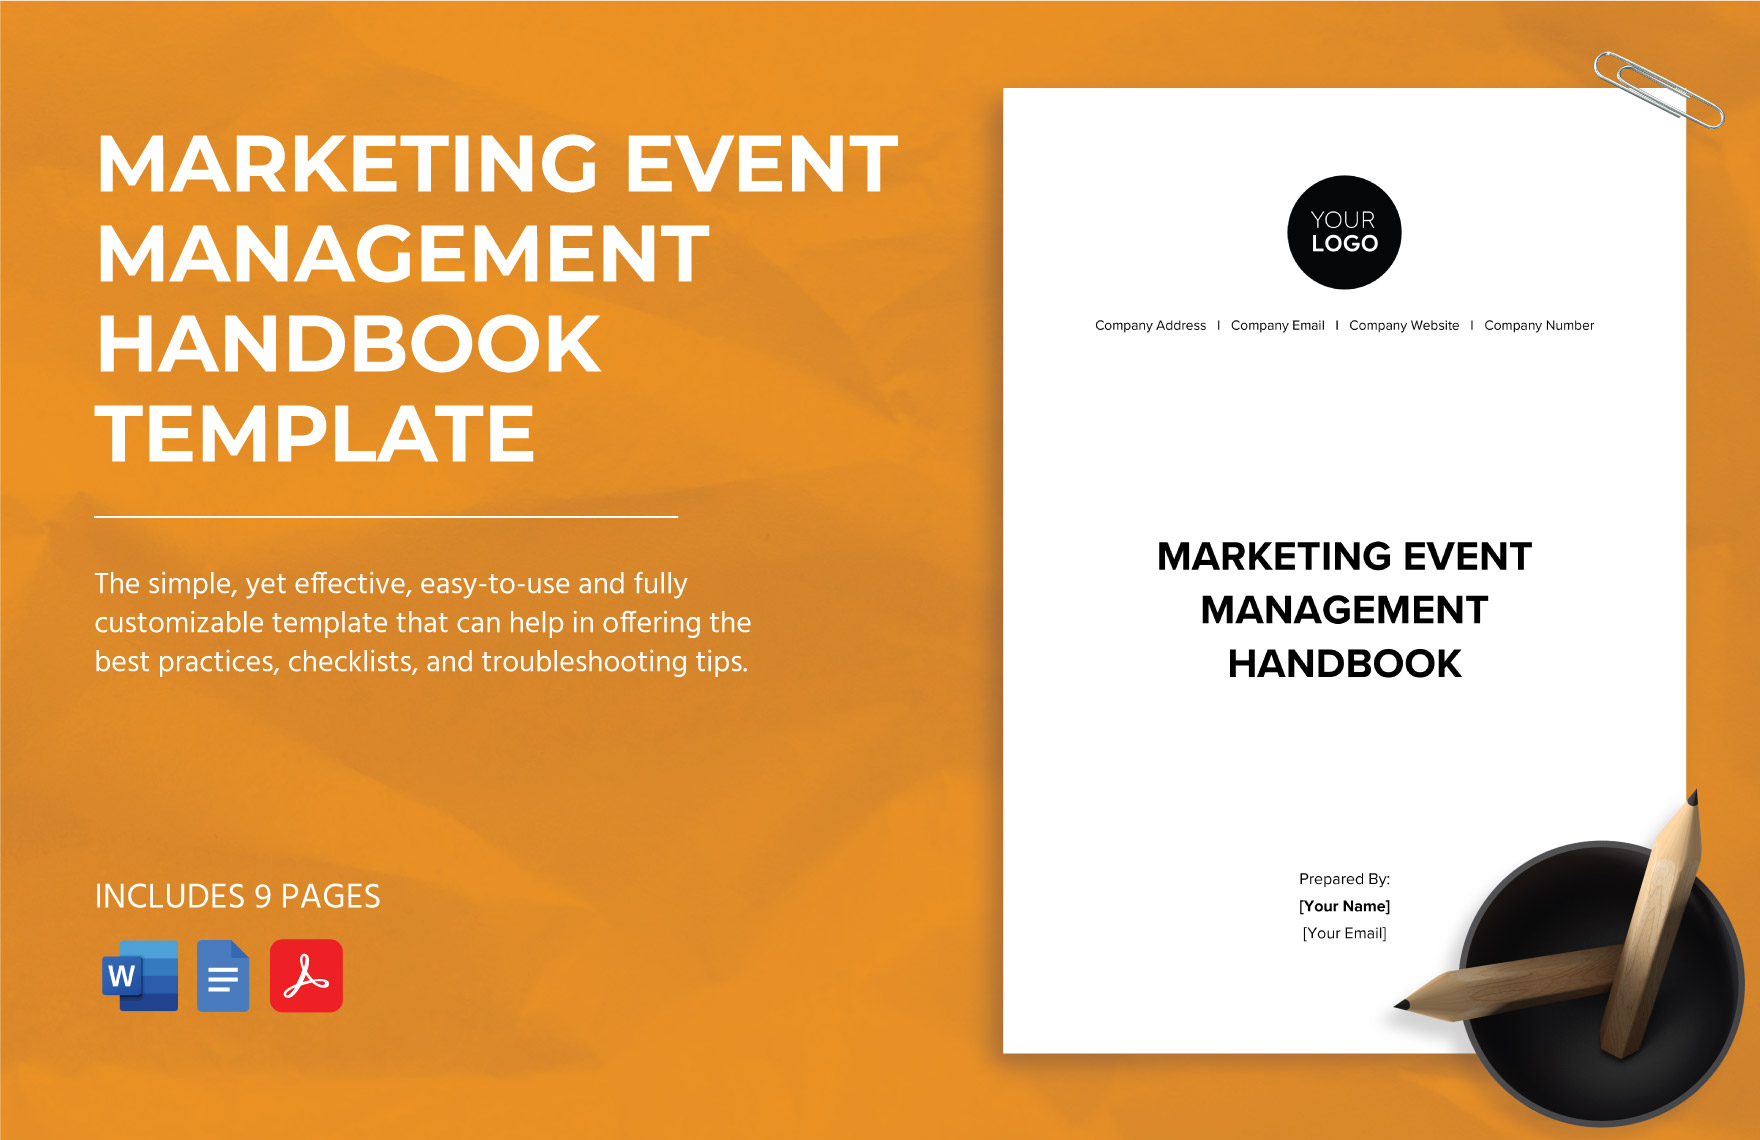 Marketing Event Management Handbook Template in Word, Google Docs, PDF